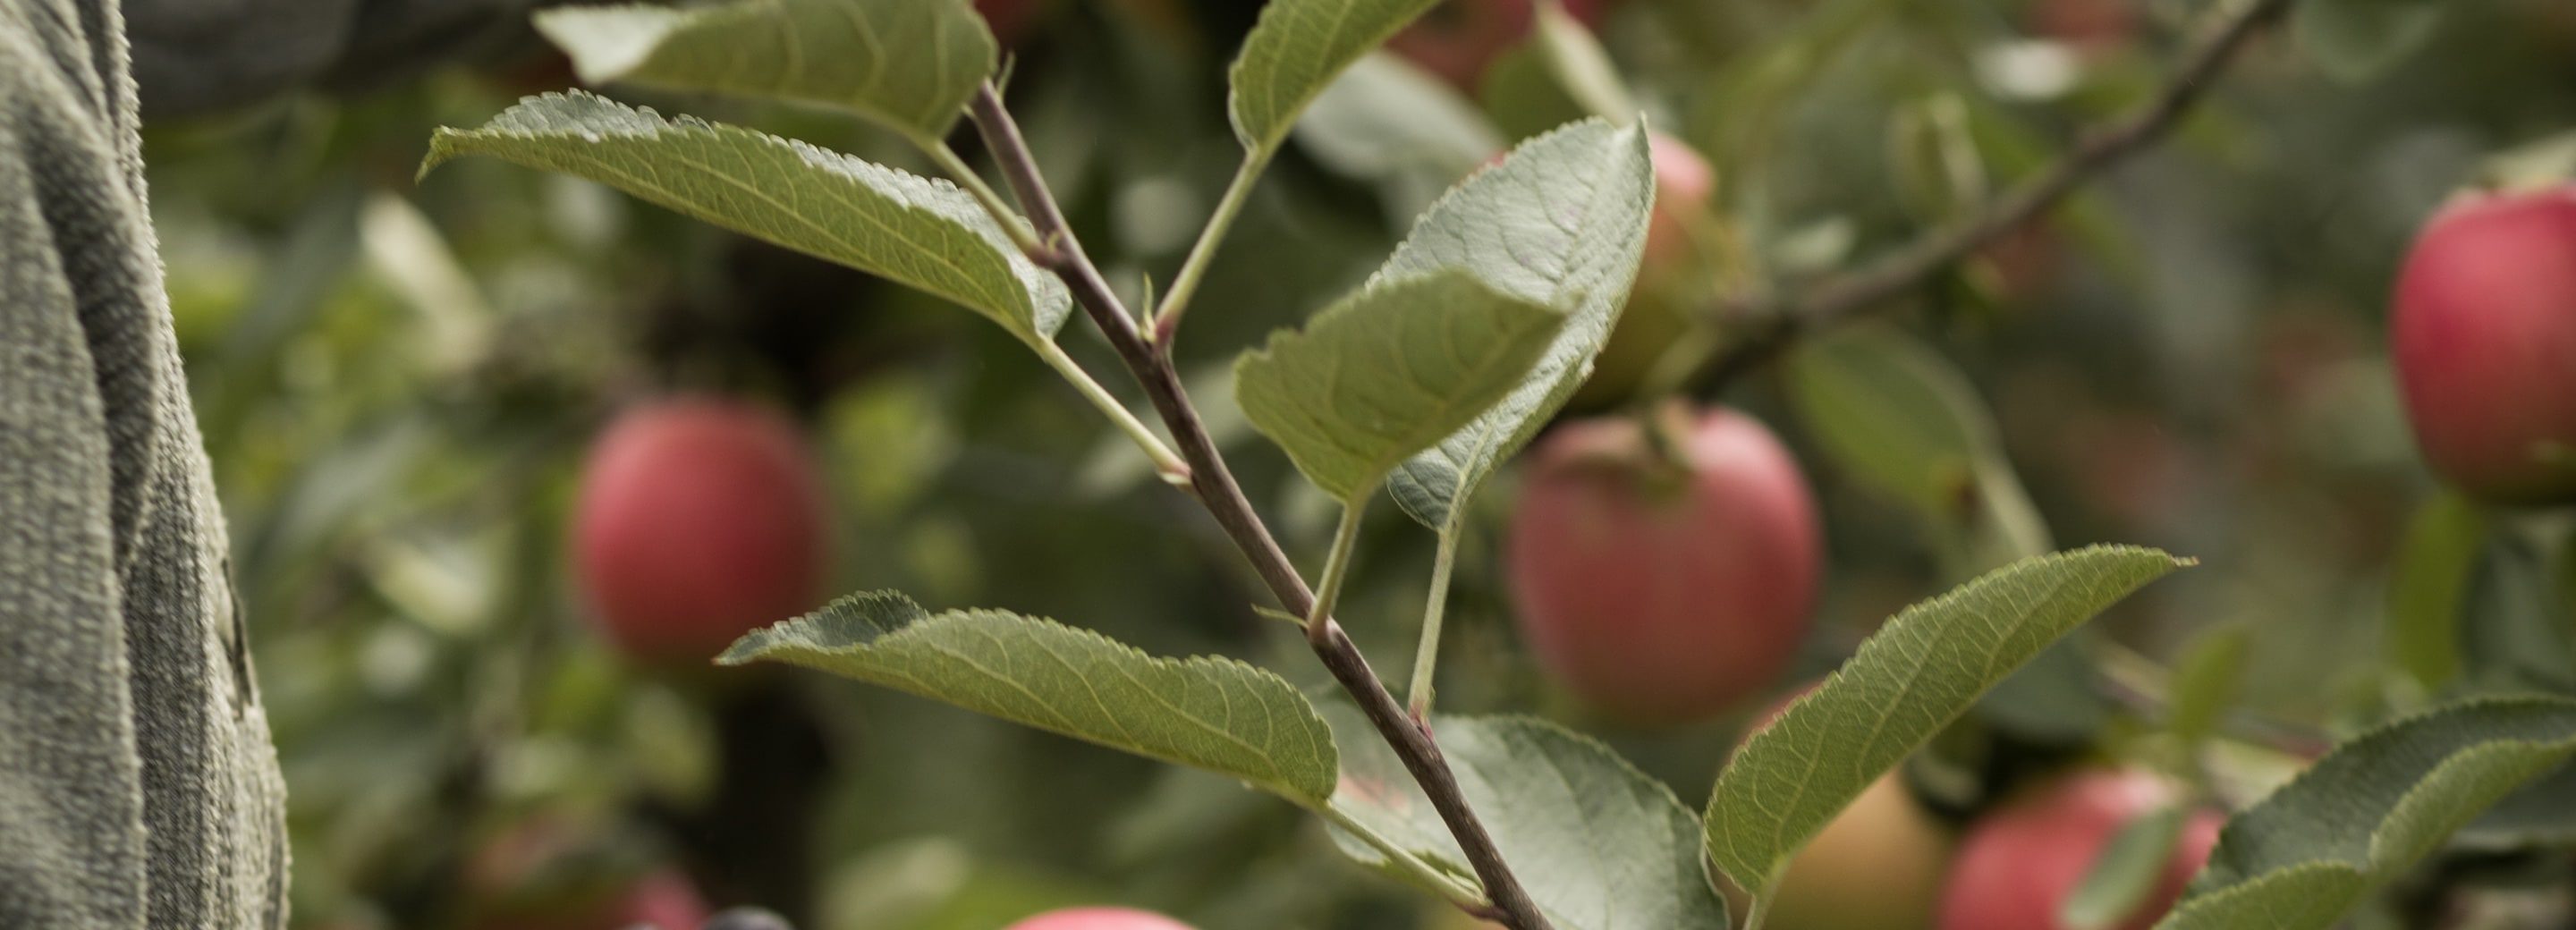 Organic Apples Availability - Biosüdtirol